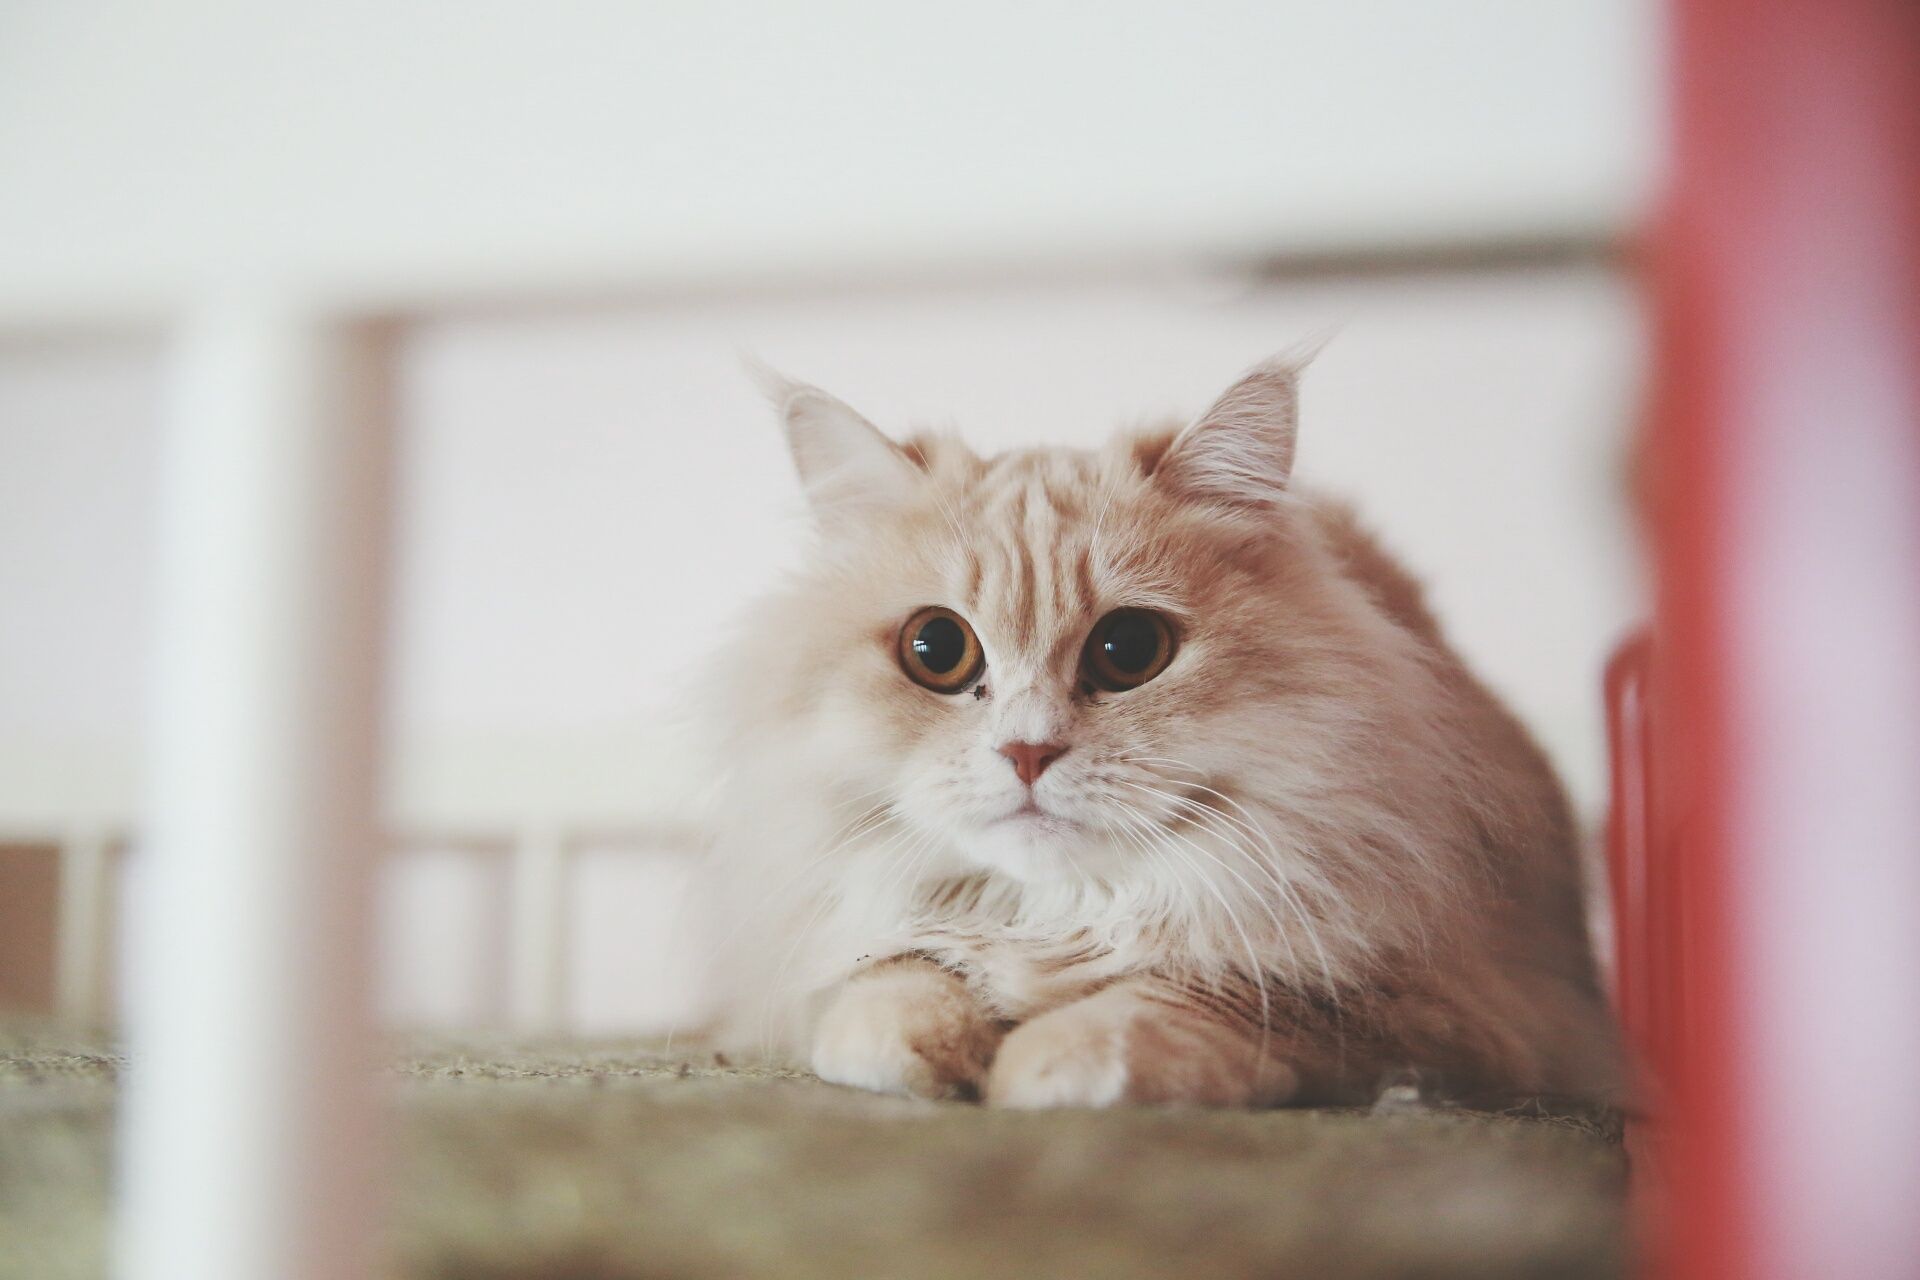 A Turkish Angora cat looking into the camera.